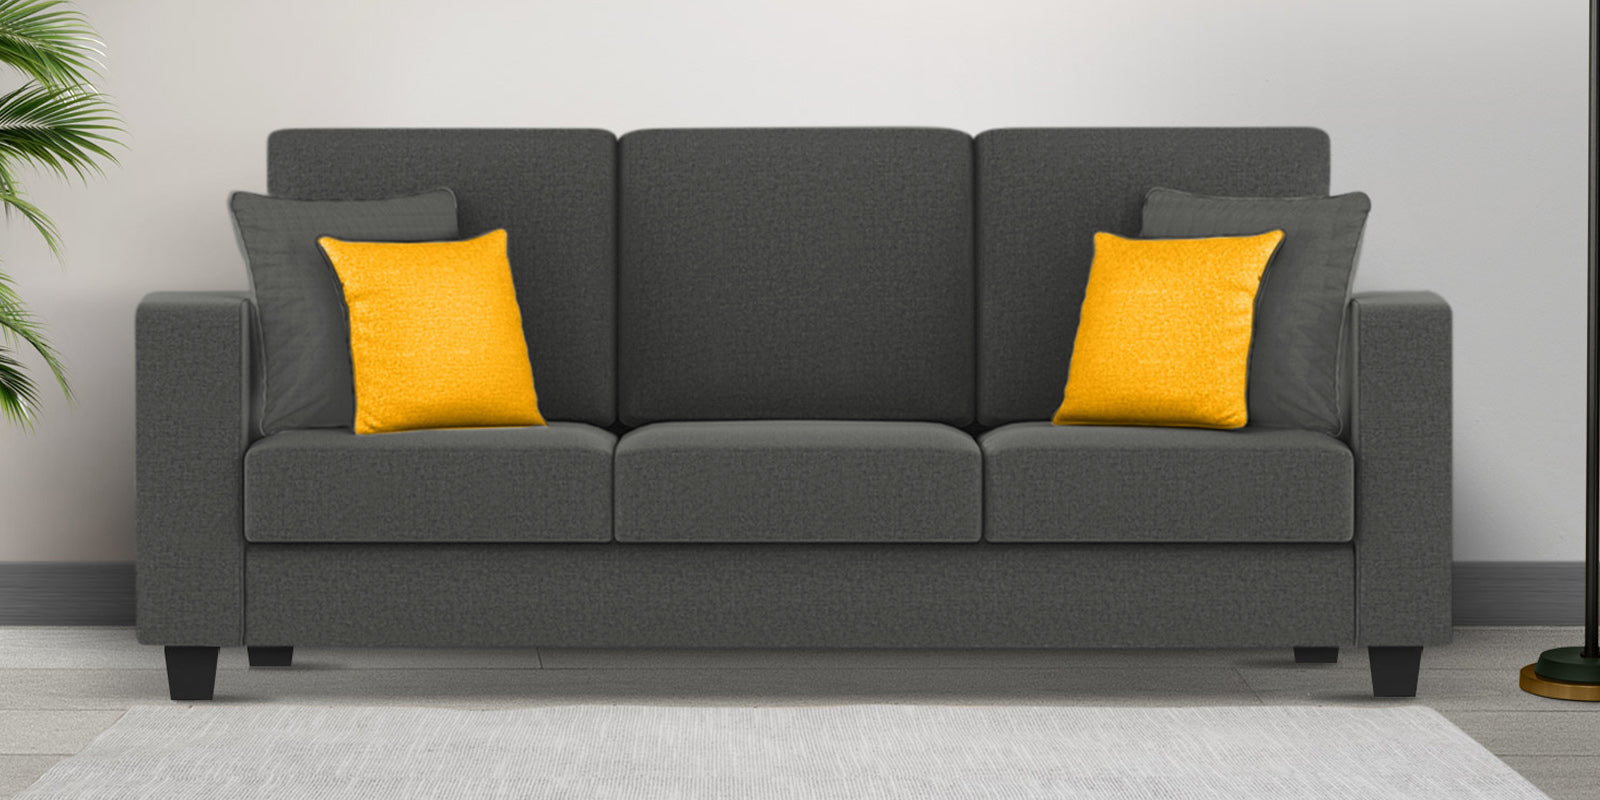 Nabi Fabric 3 Seater Sofa In Charcoal Grey Colour